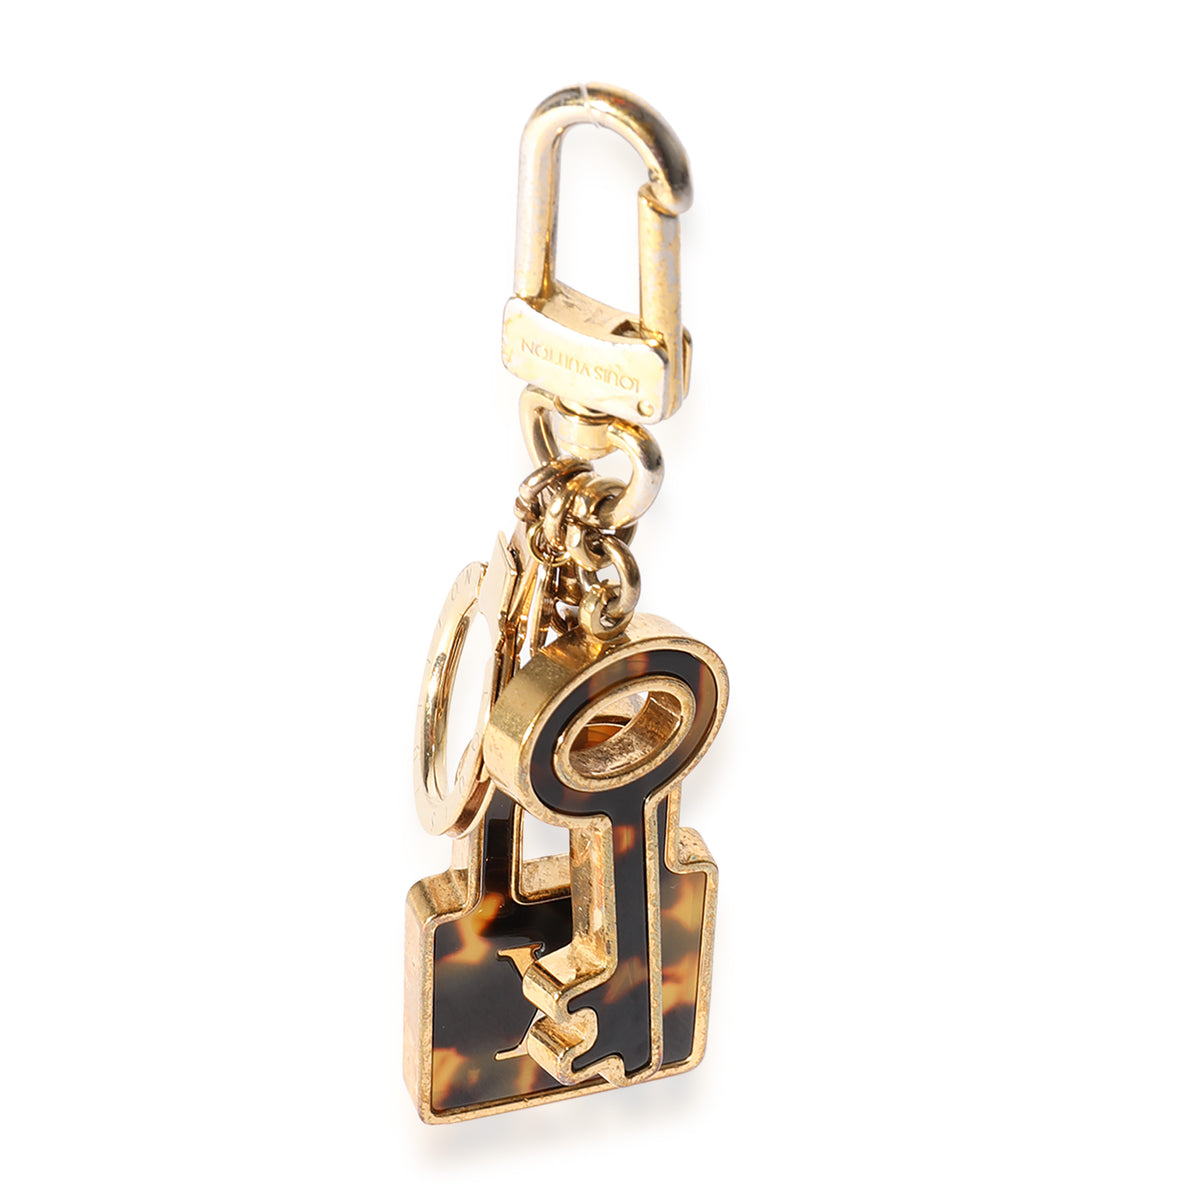 Louis Vuitton Monogram Venice Bag Charm Key Ring